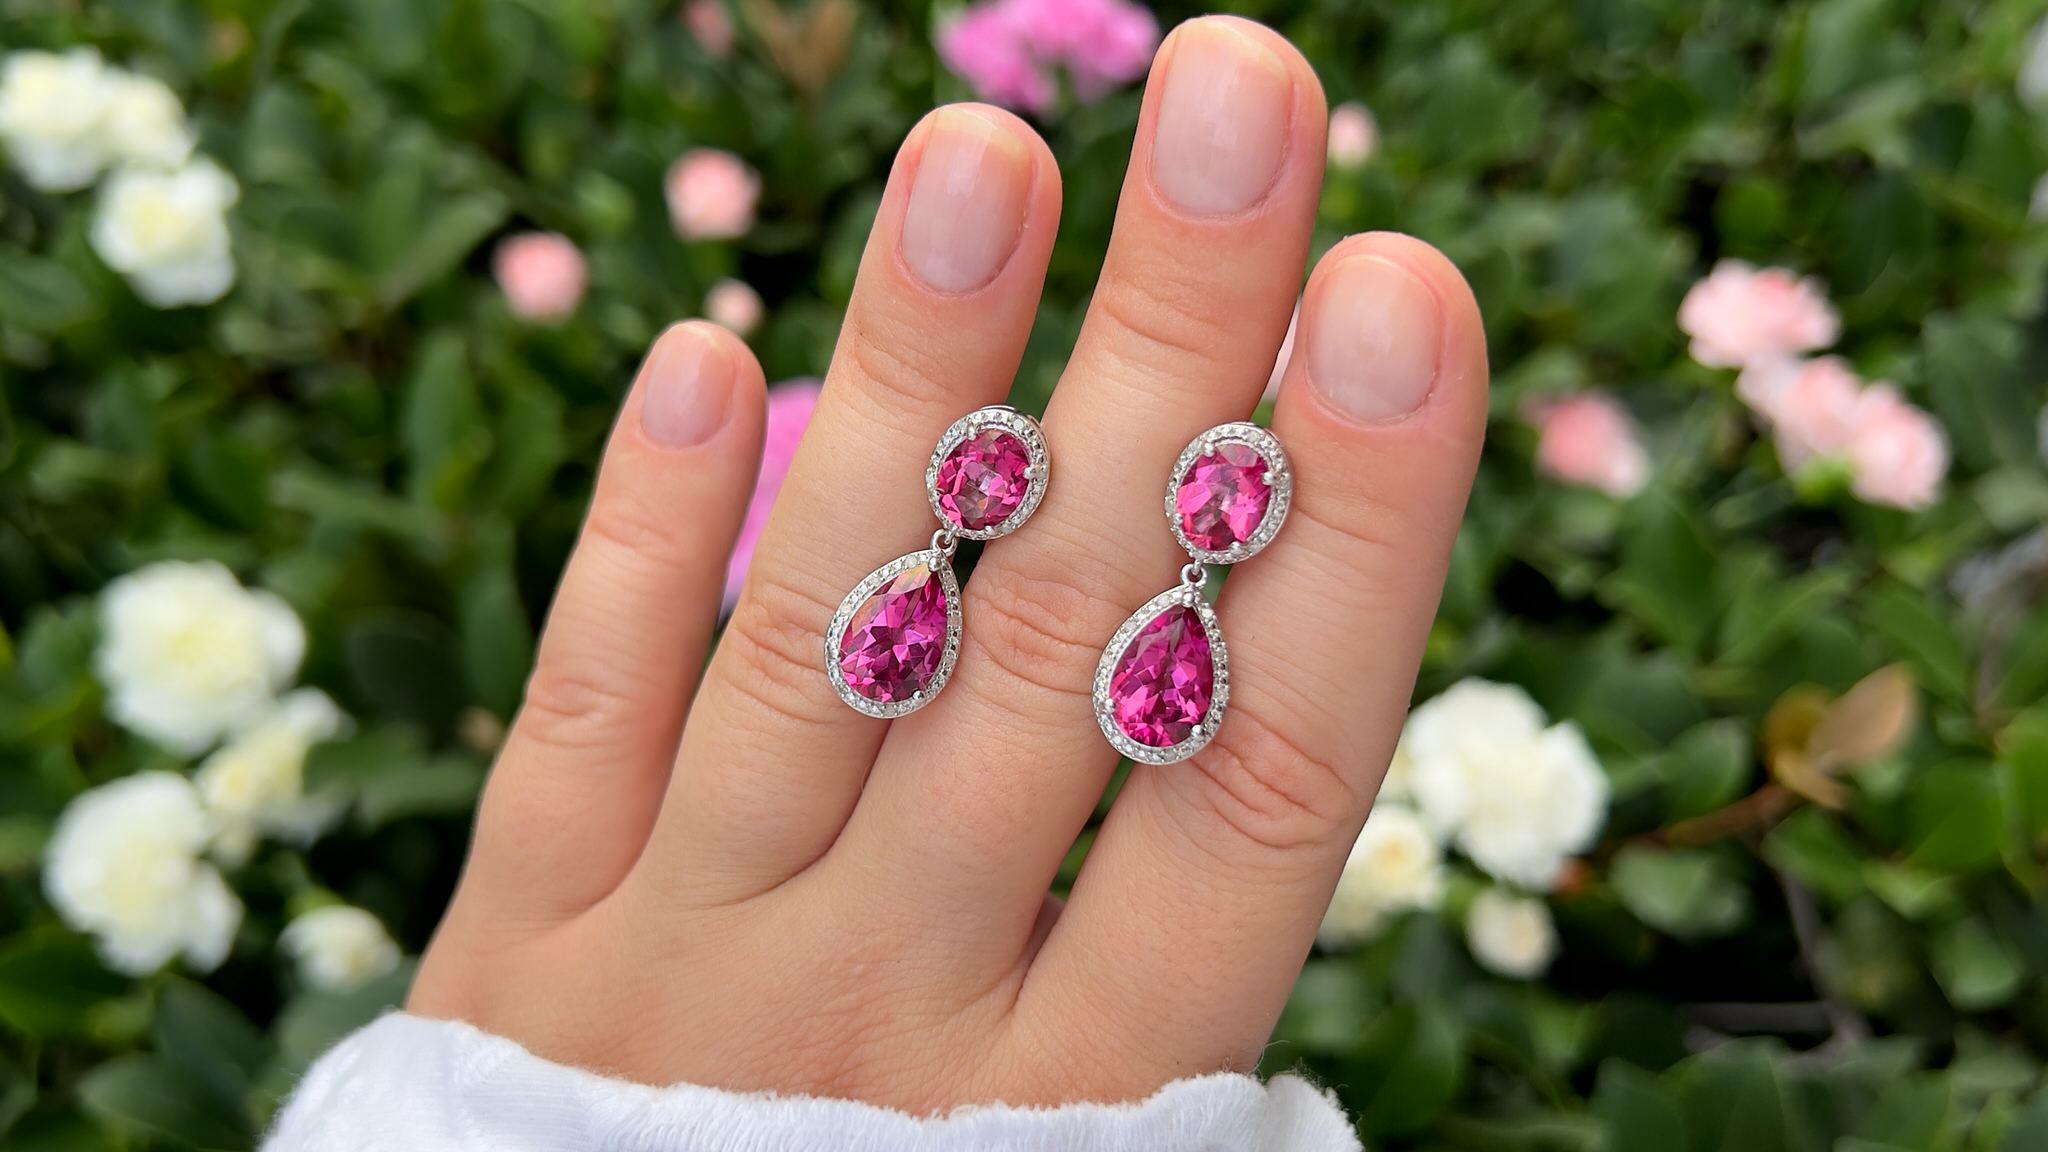 Hot Pink Topaz Earrings Diamond Setting 11.35 Carats Total 1